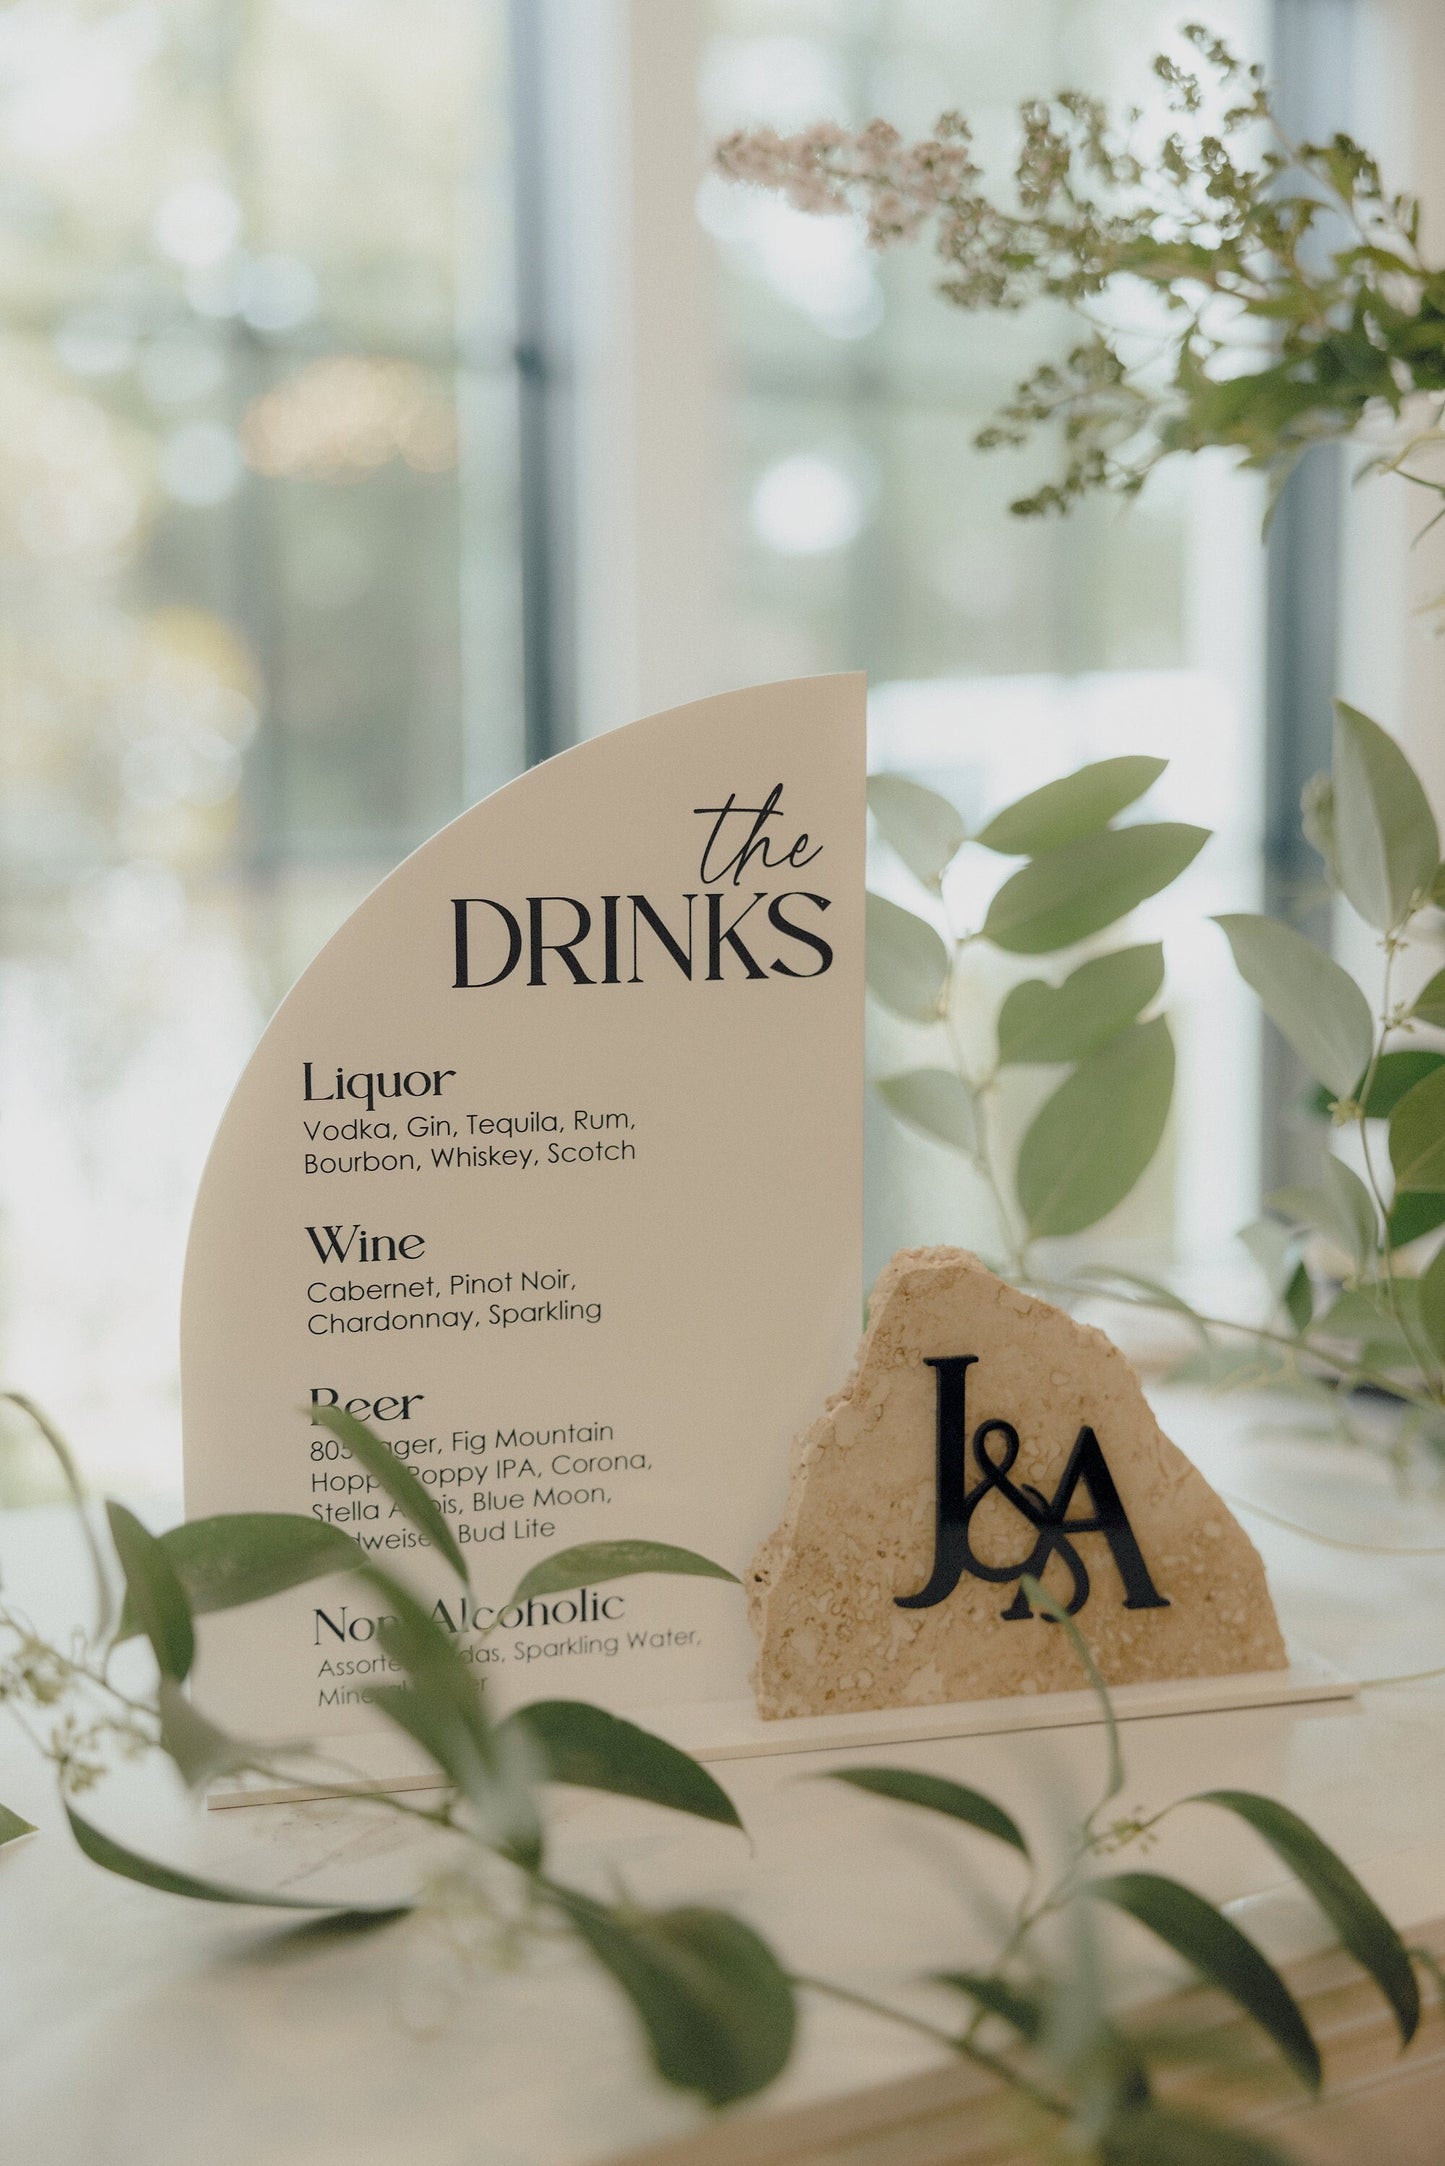 Acrylic Stone Signature Drinks Sign | Layered Menu | Wedding Menu | Table Numbers with Menu | Birthday Menu Table | Travertine Stone